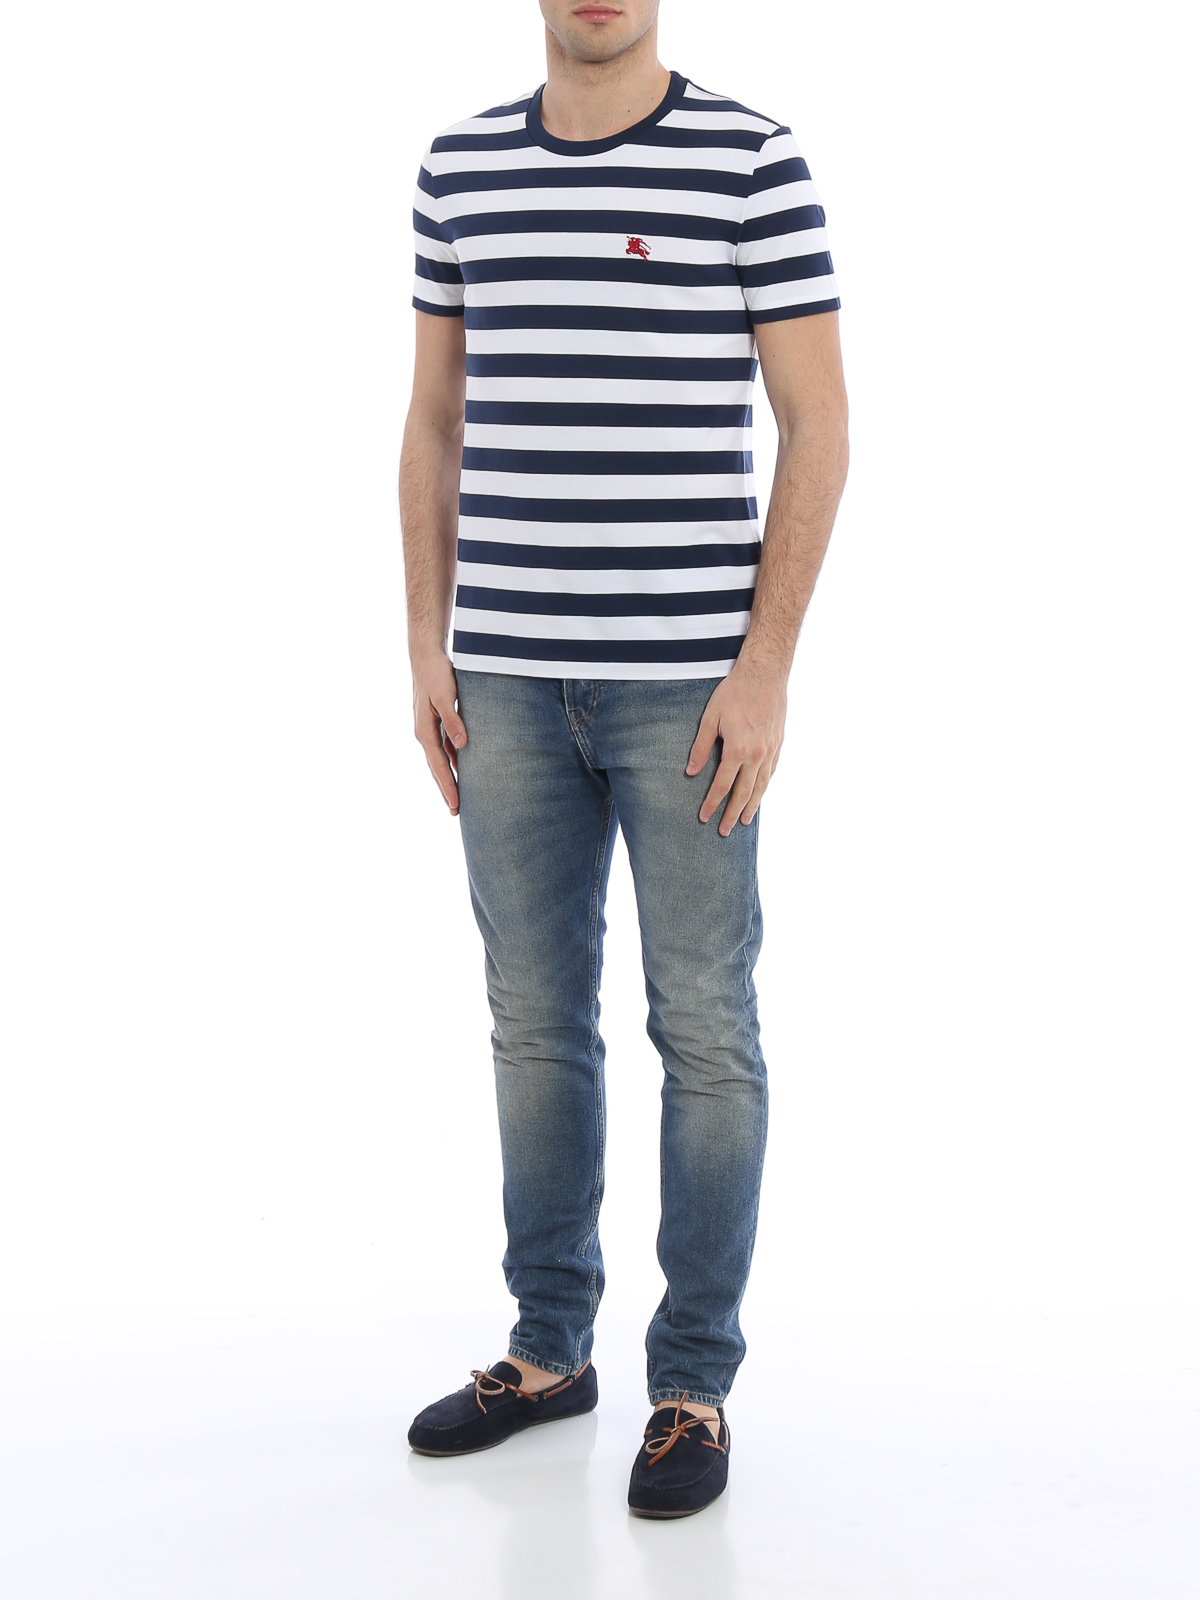 T-shirts Burberry - Torridge striped Tee - 4046477 | Shop online at iKRIX